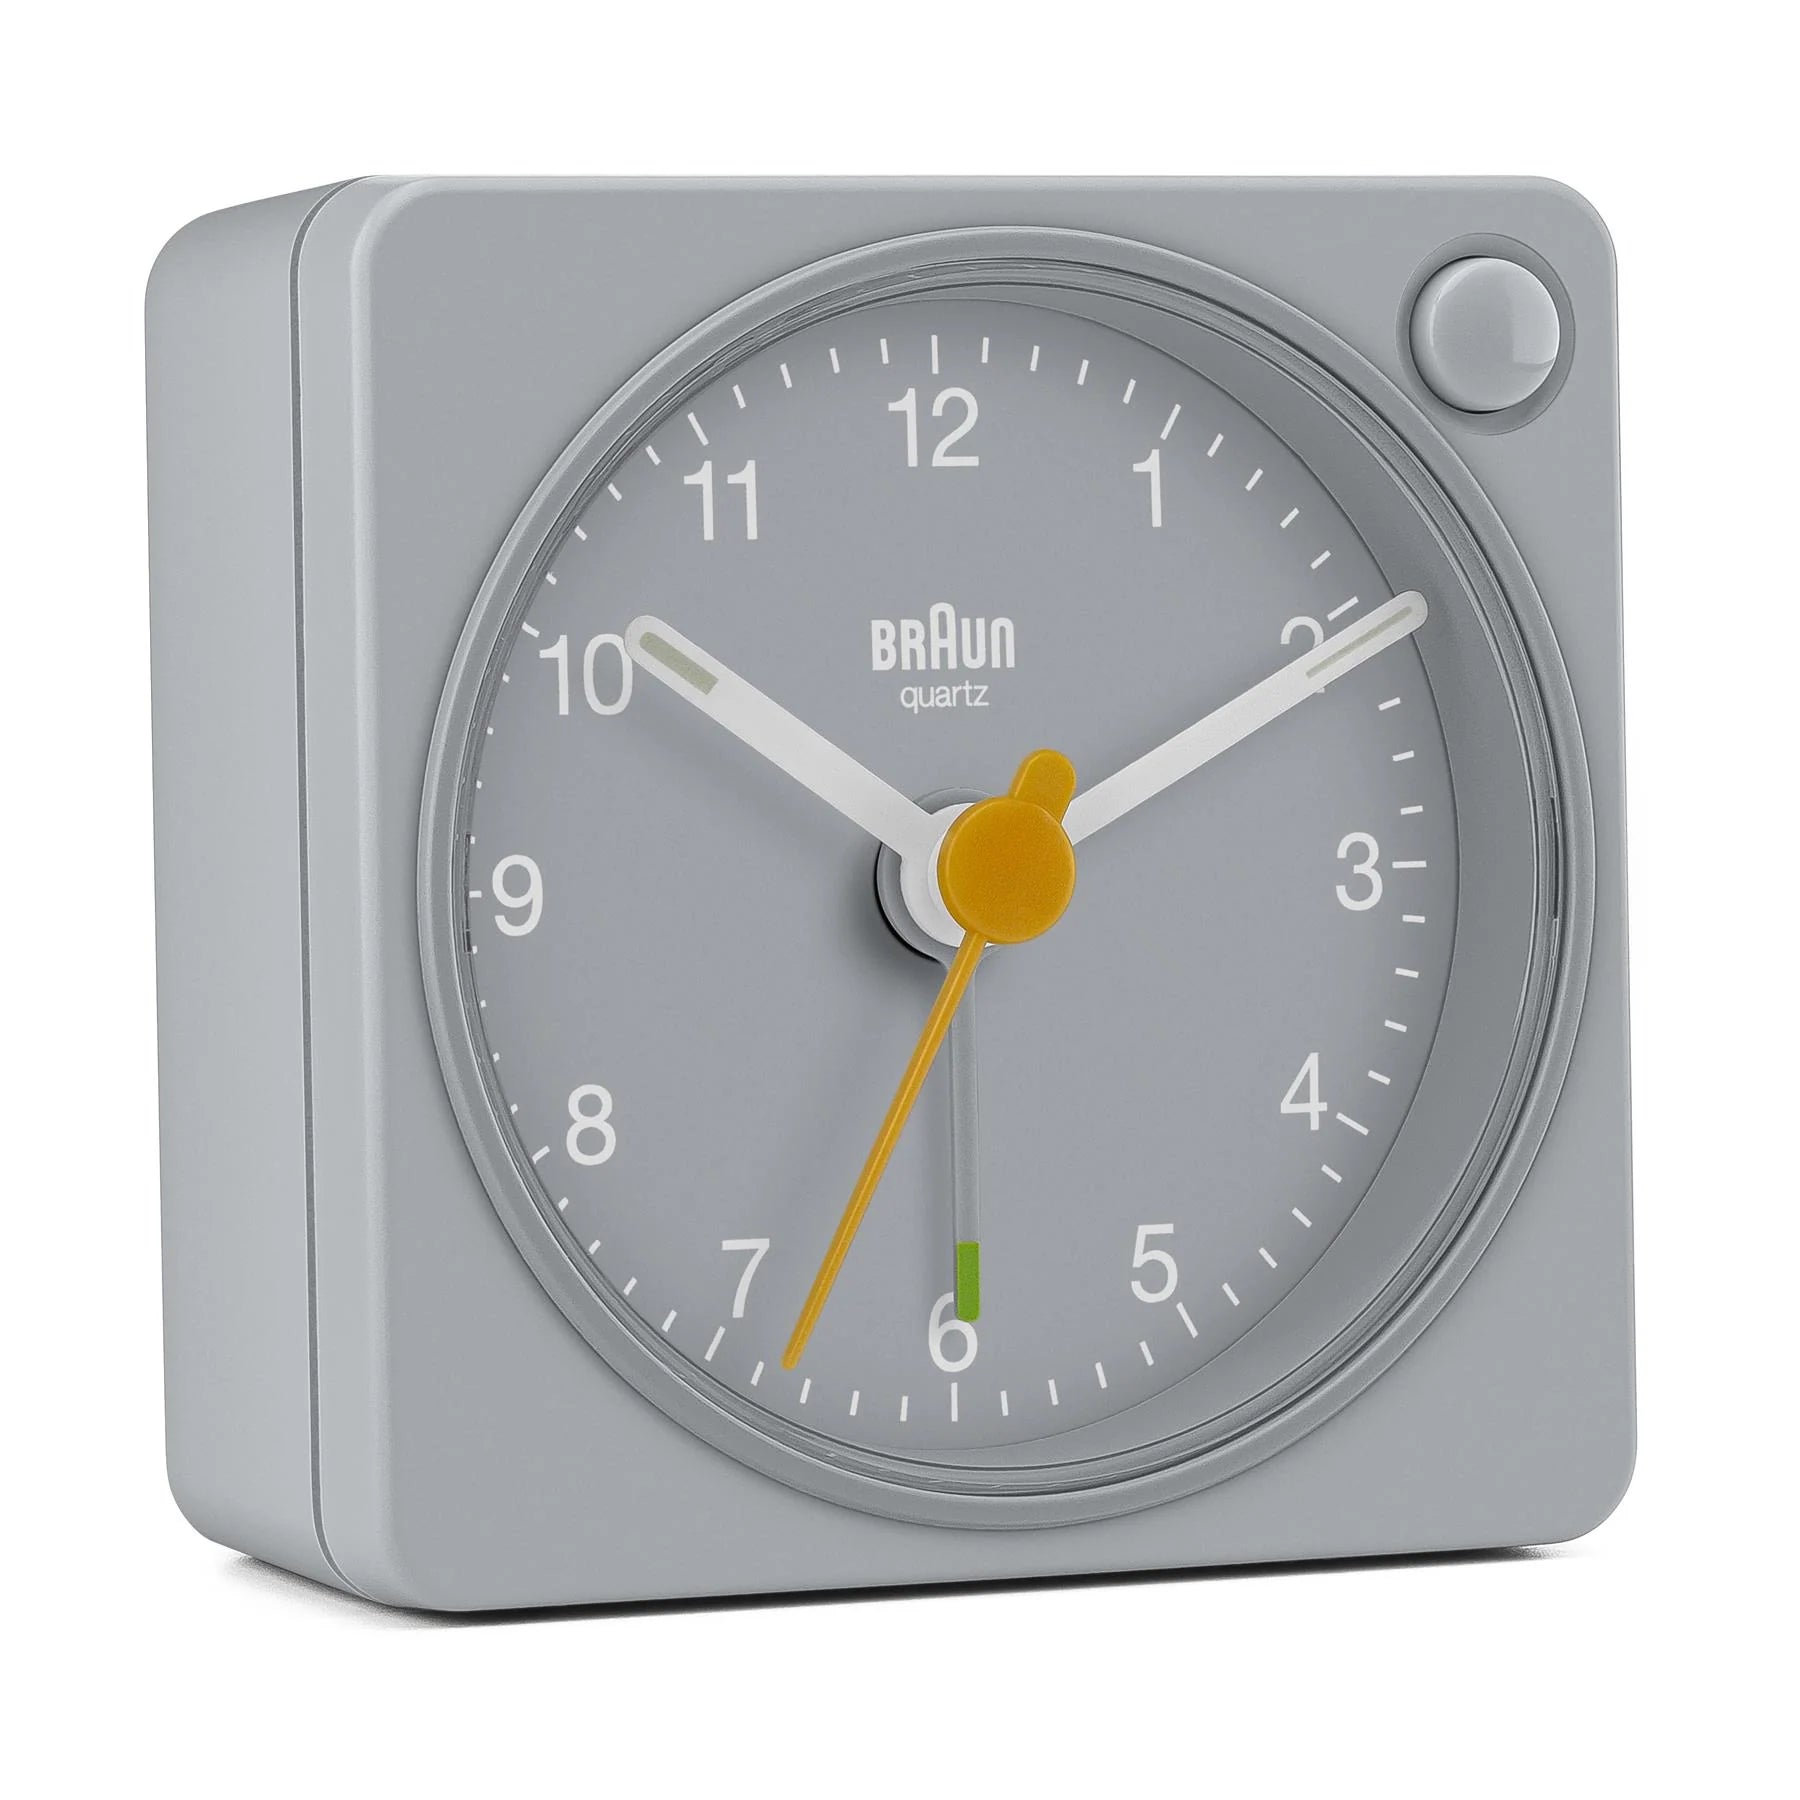 BC02XG Braun Classic Analogue Travel Alarm Clock - Grey